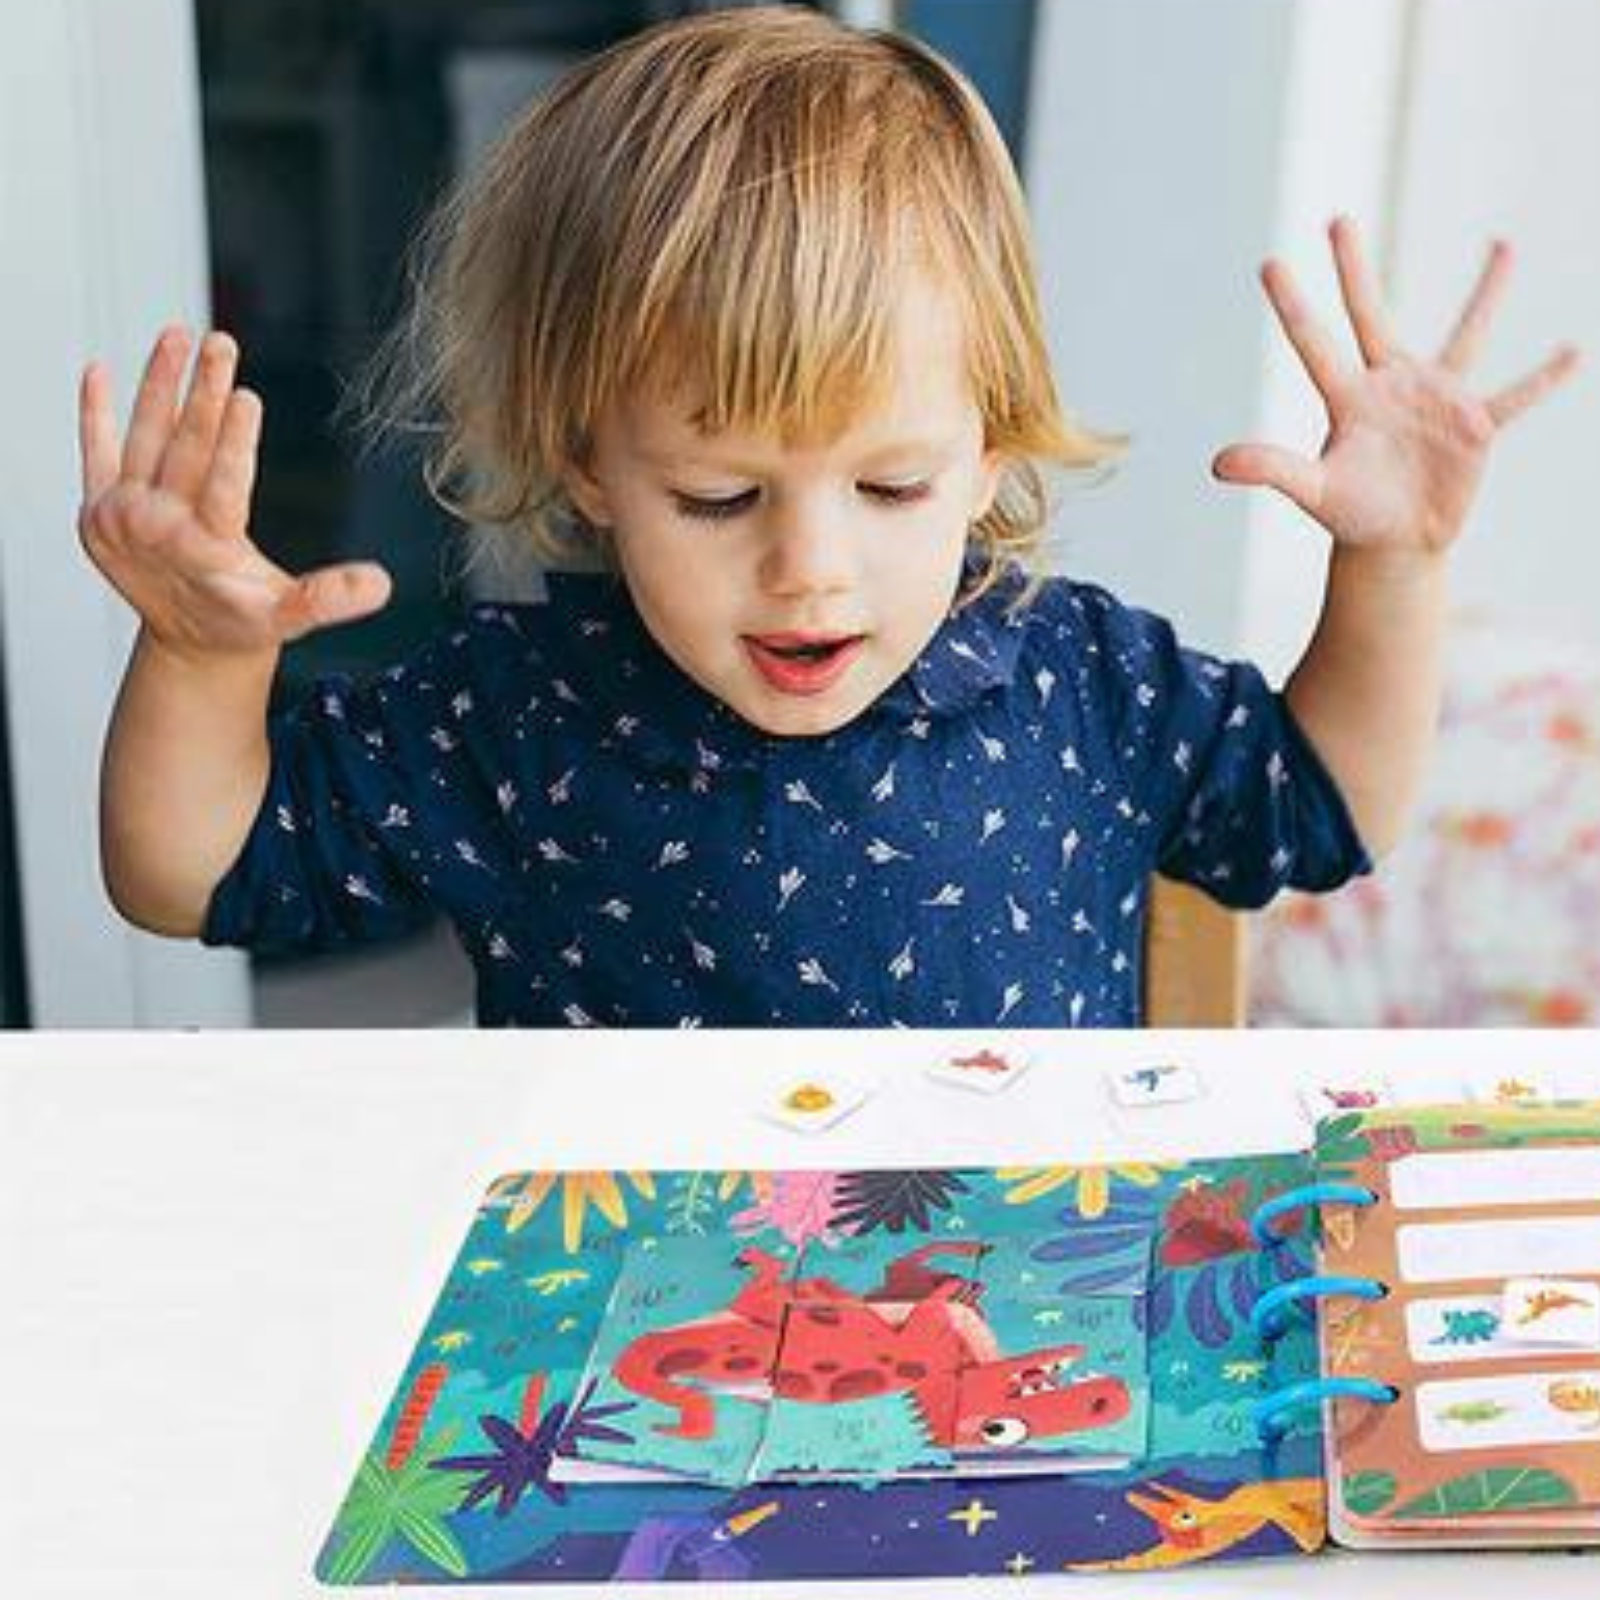 Montessori-Sensorikbuch